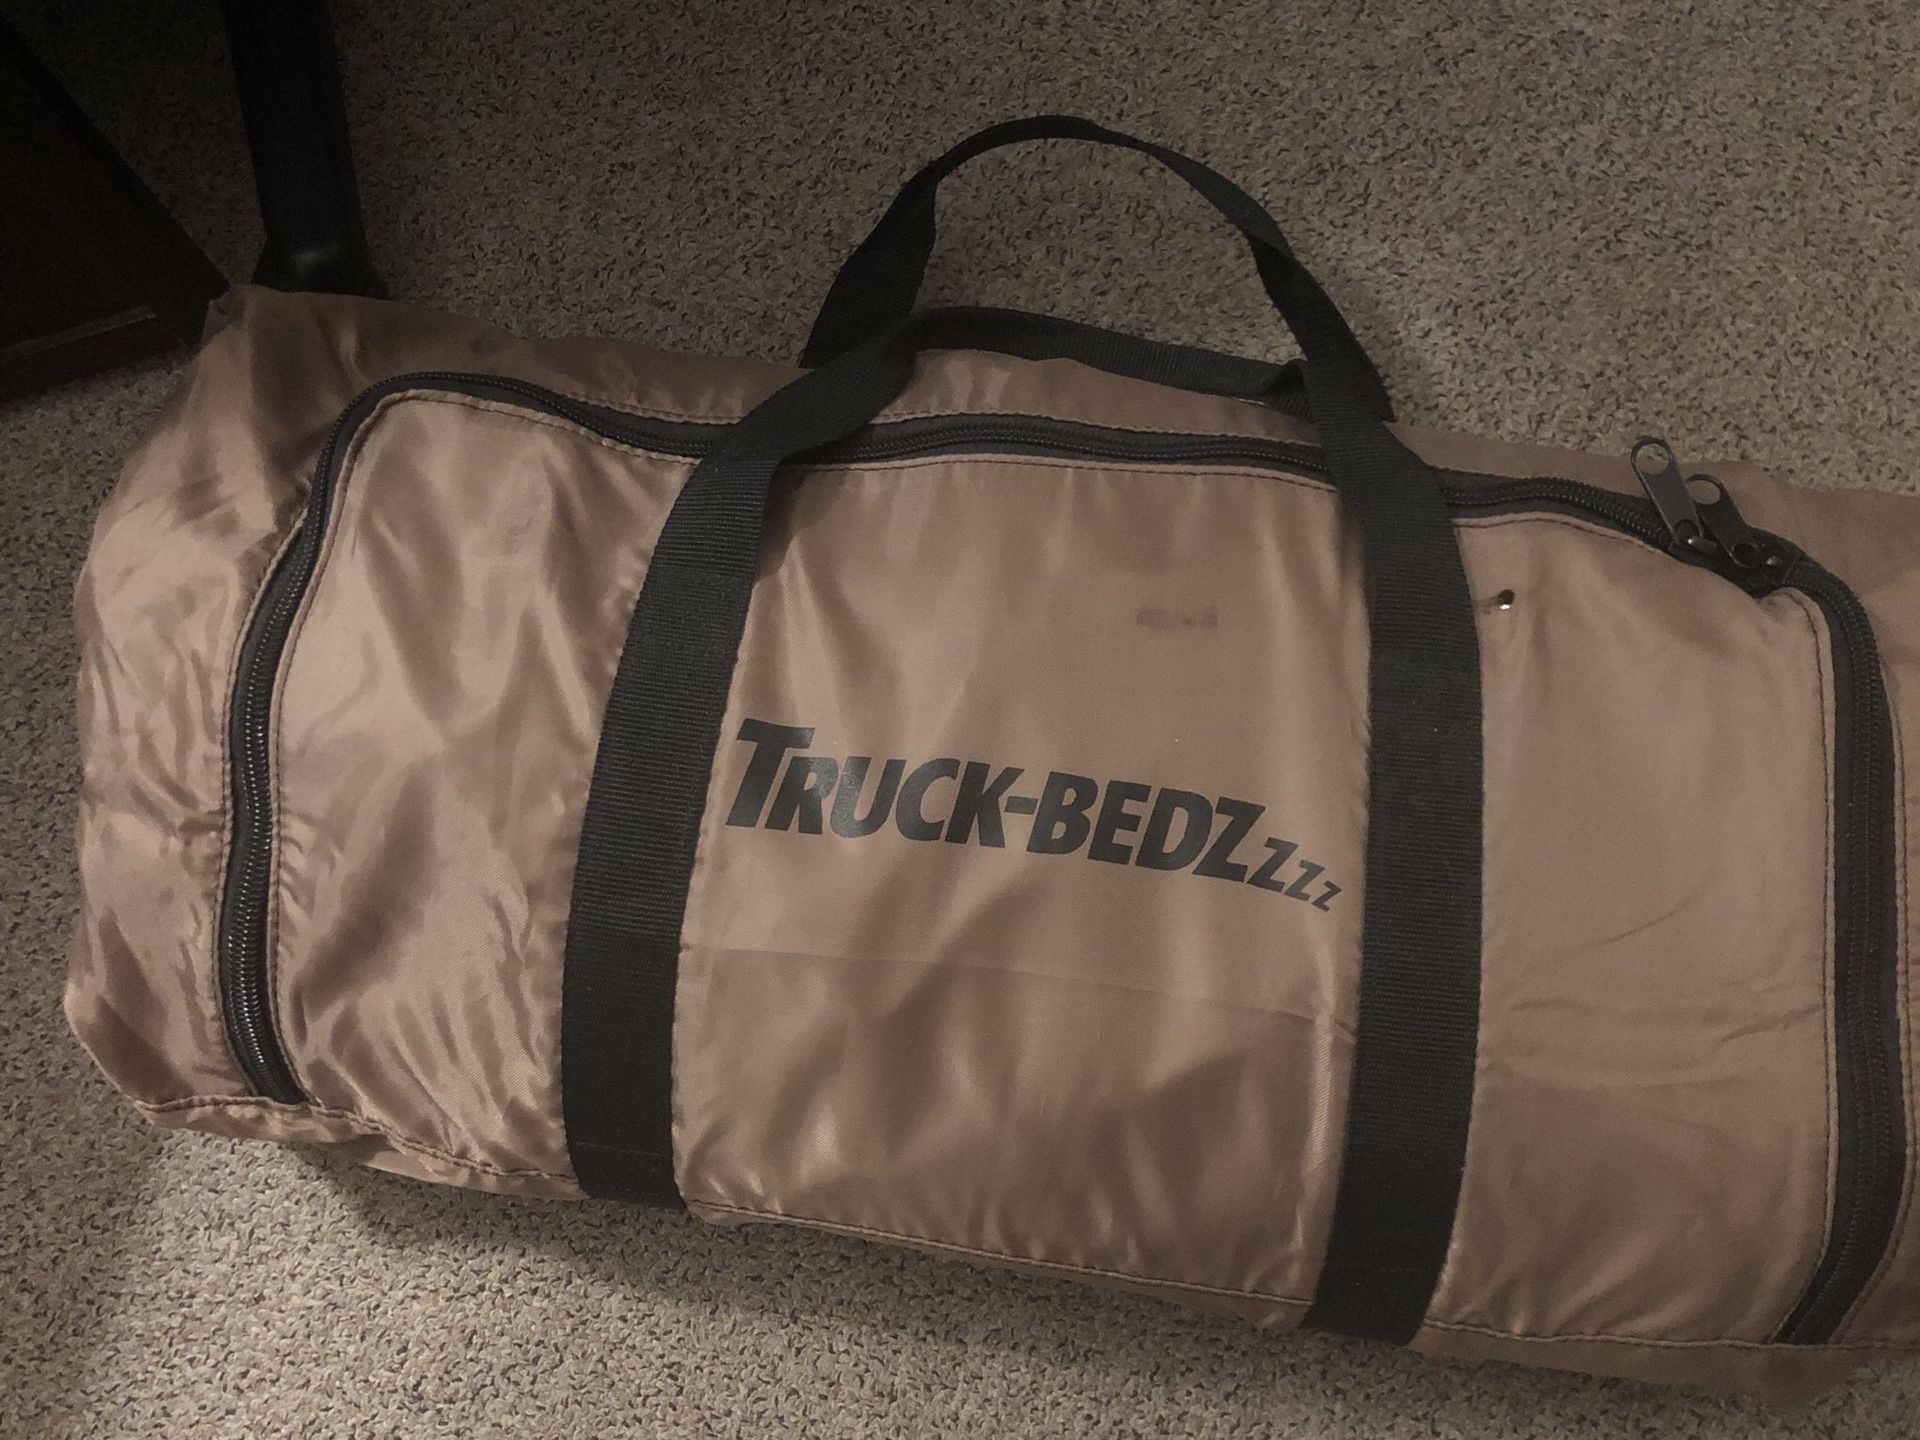 Truck bedz airbedz air mattress for truck bed